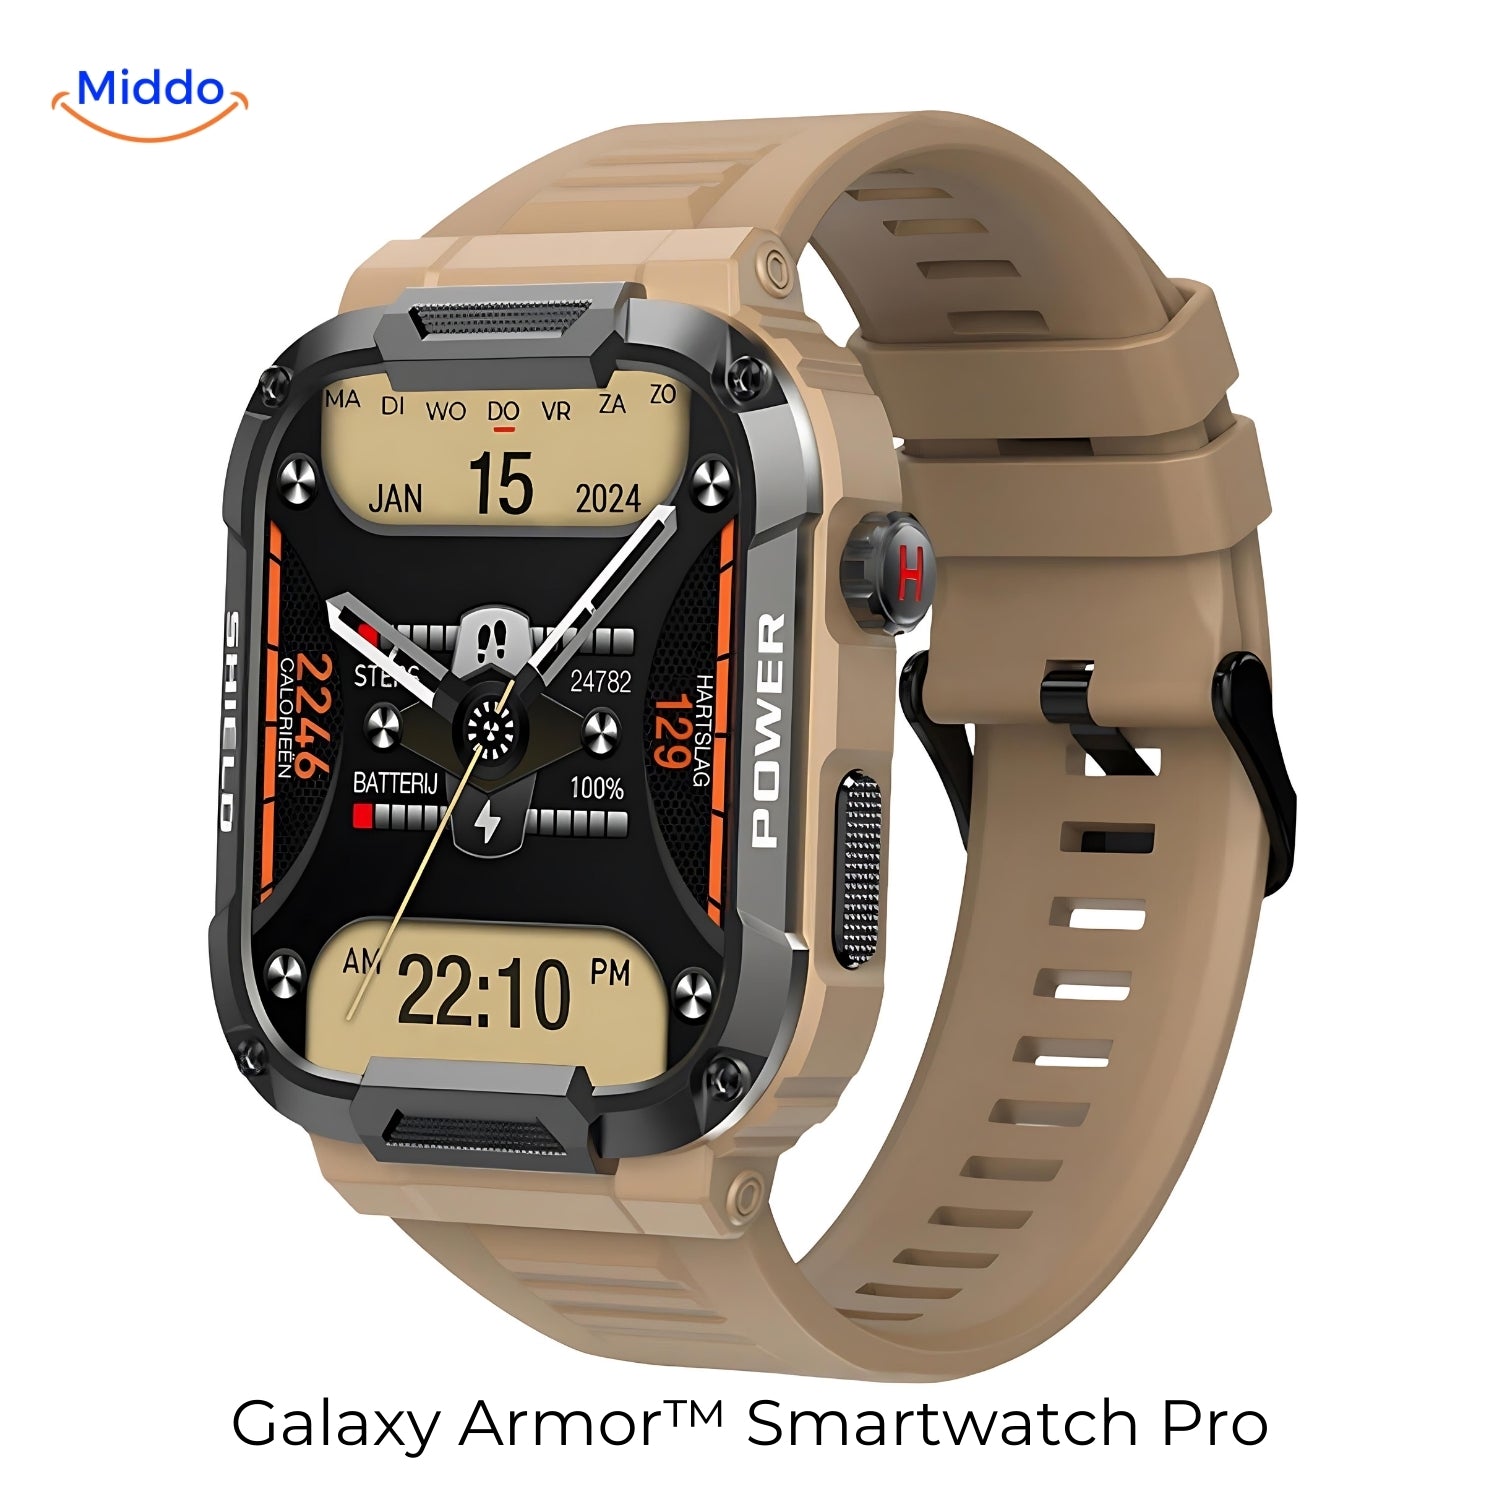 Galaxy Armor Smartwatch Pro voor IOS en Android Kaki Limited Edition www.middo.nl